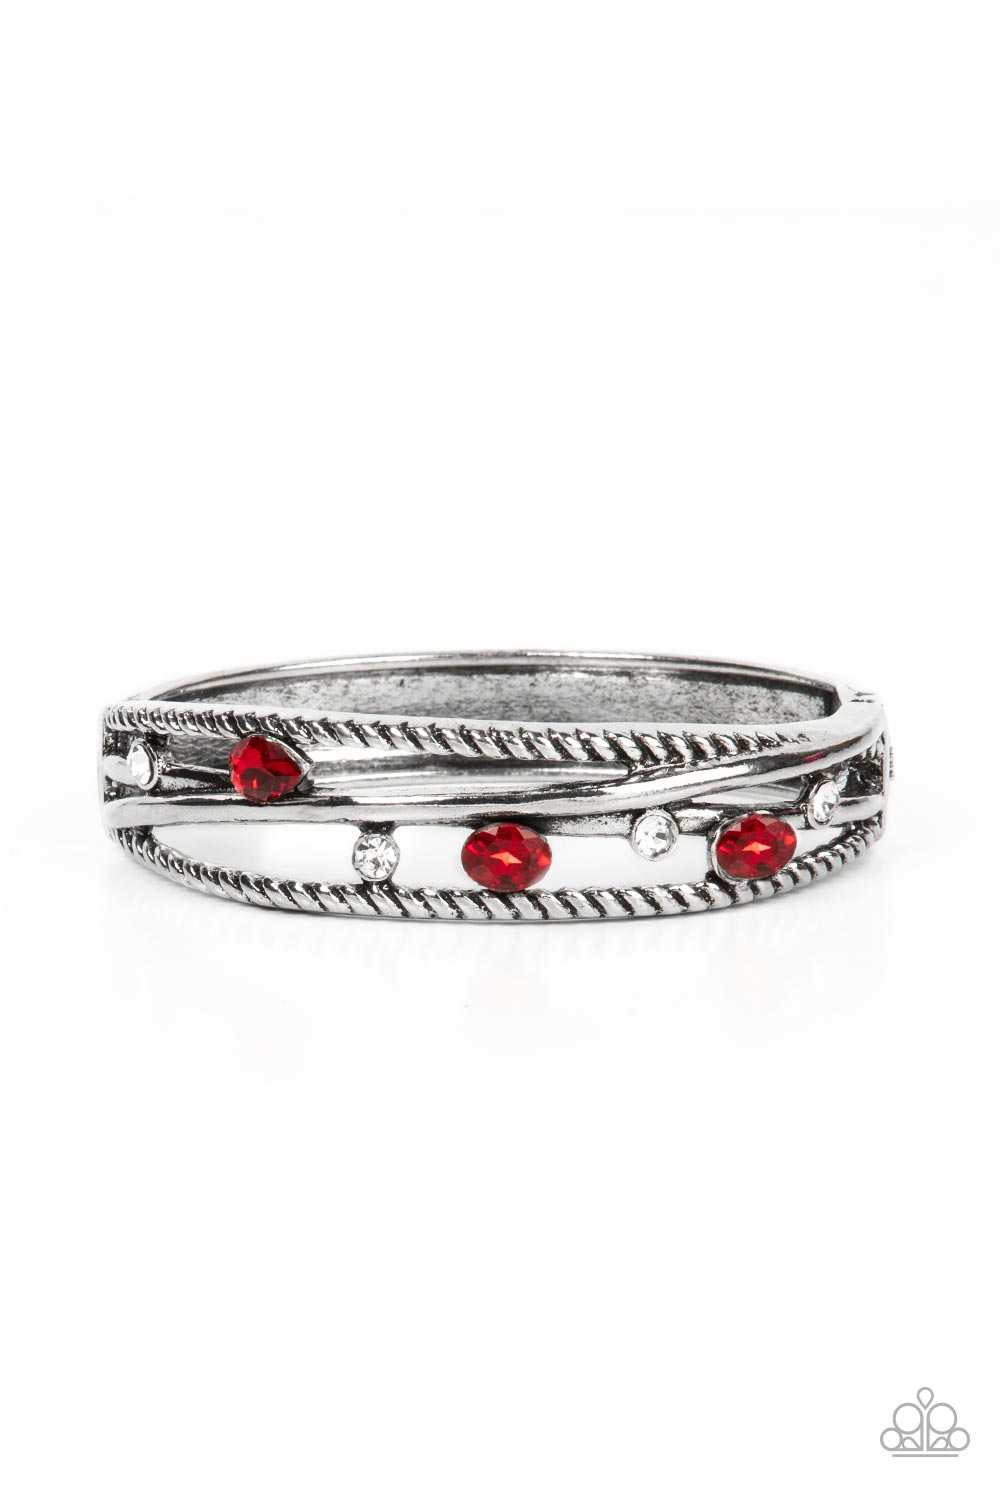 Bonus Bling Red Rhinestone Bracelet - Paparazzi Accessories- lightbox - CarasShop.com - $5 Jewelry by Cara Jewels